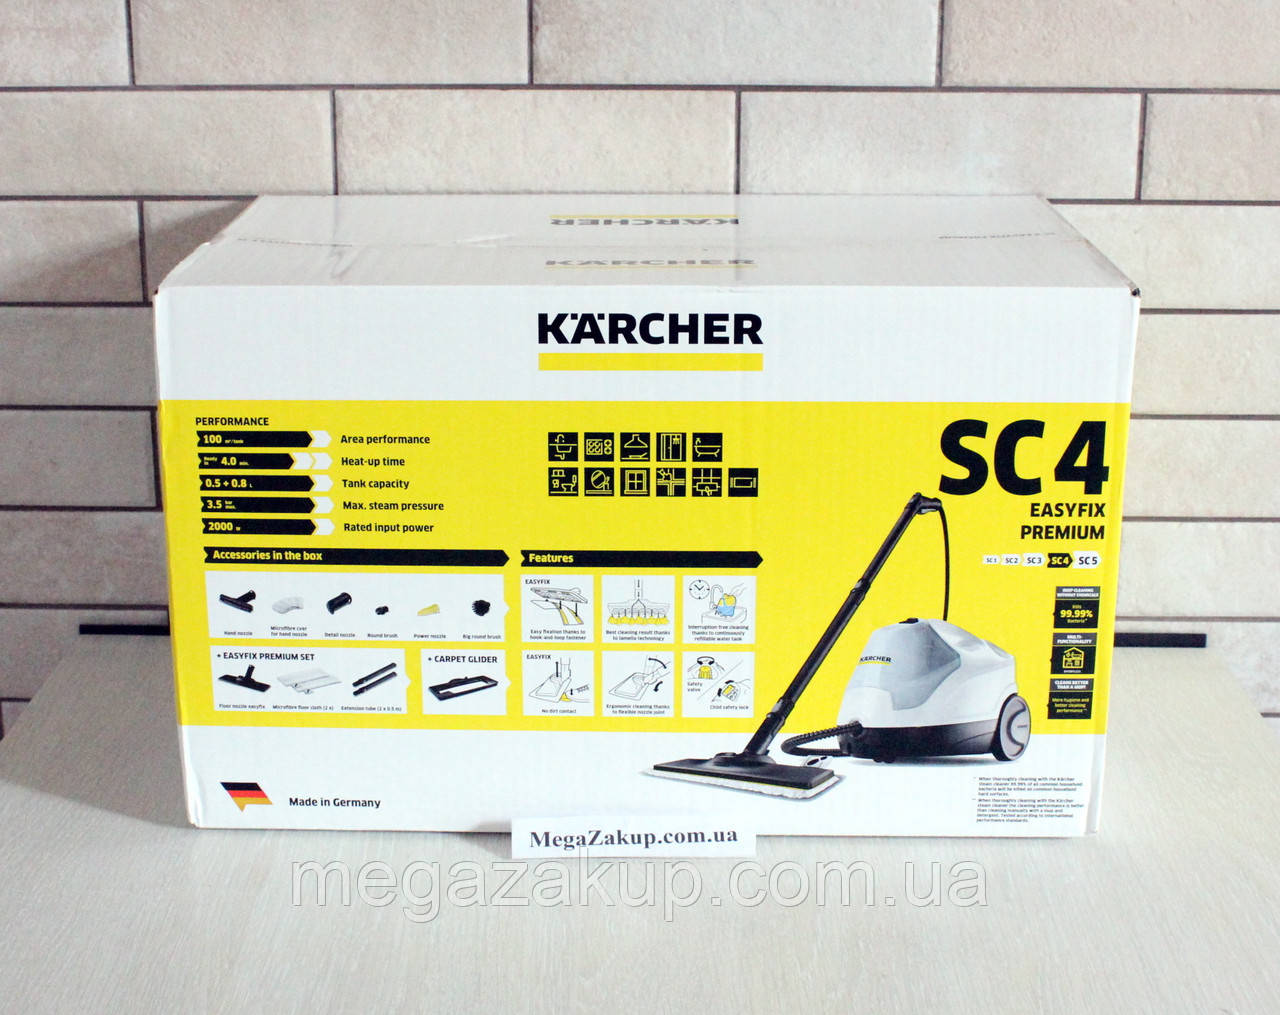 Karcher SC4 EasyFix Premium